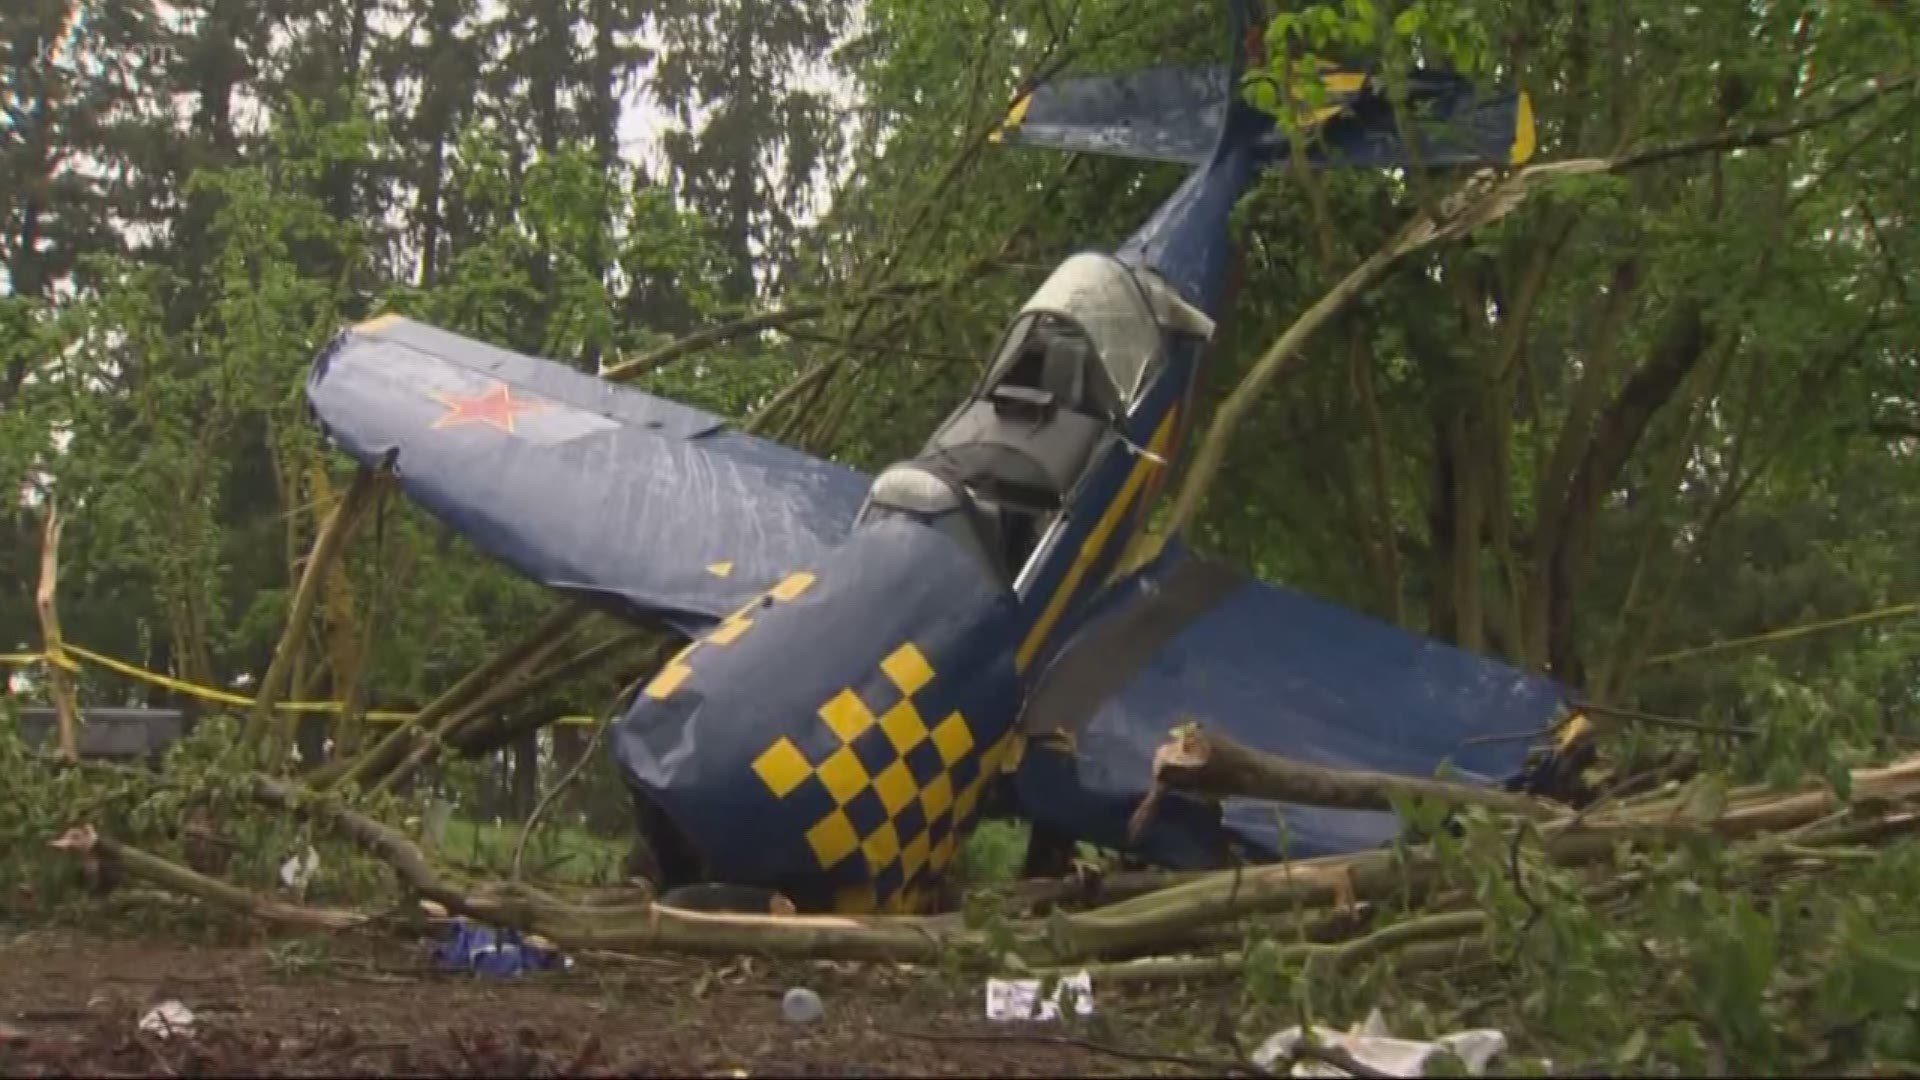 Men hurt in plane crash near Hillsboro identified